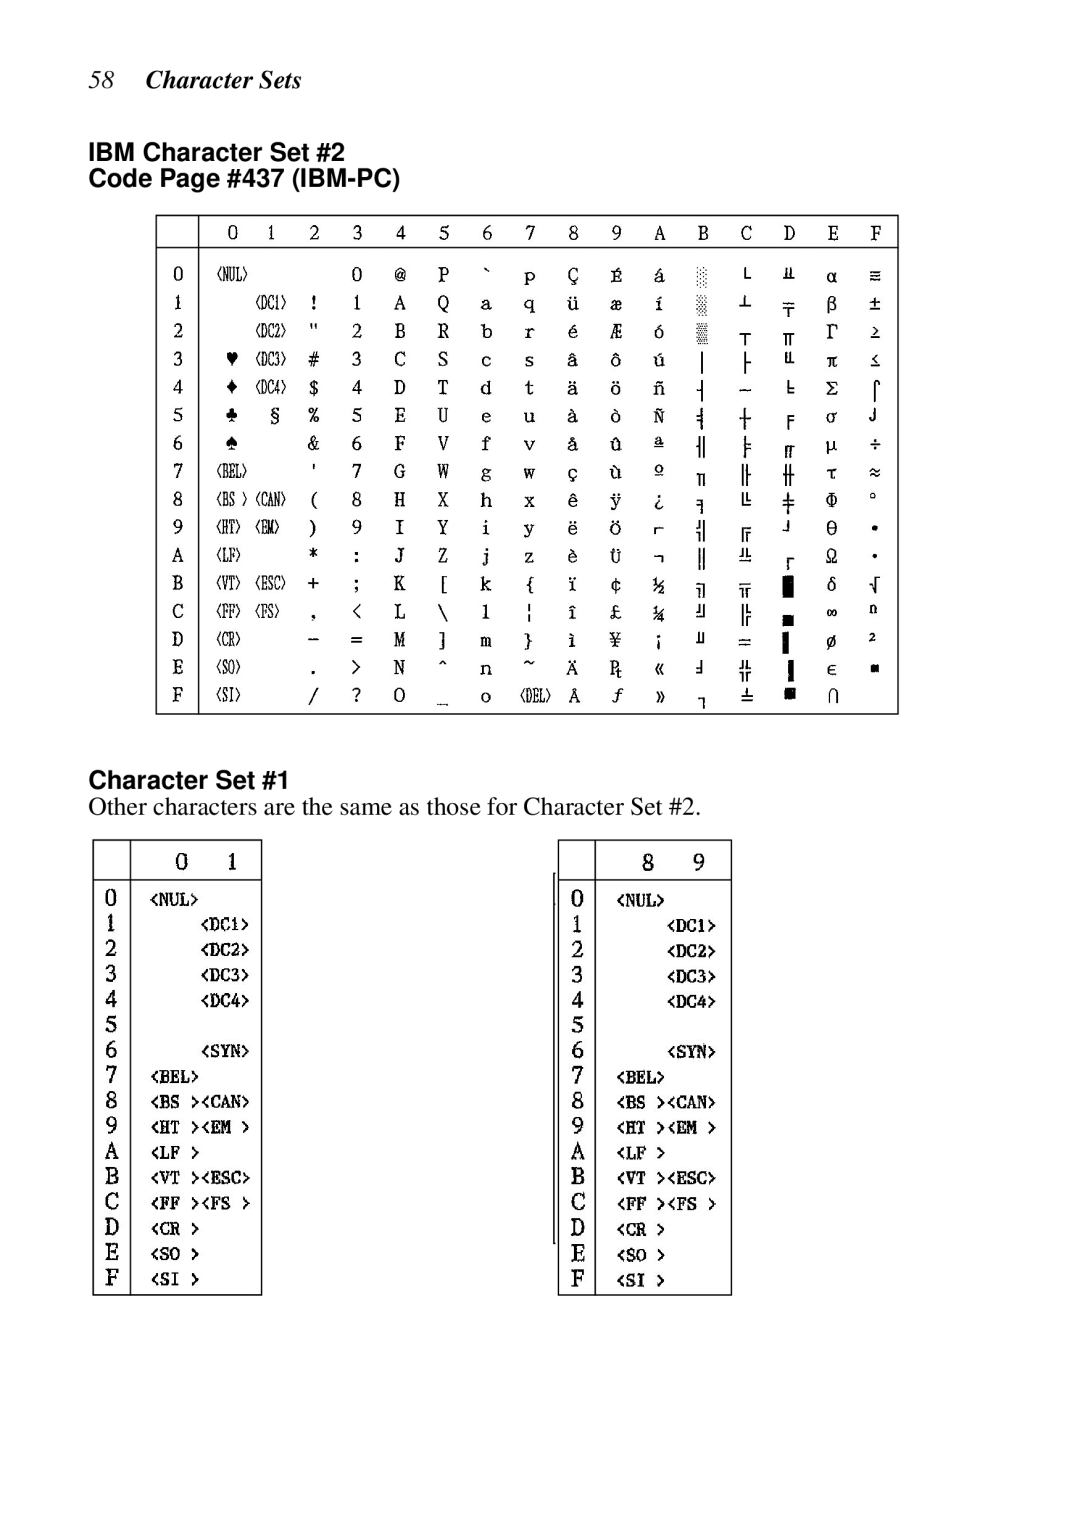 Star Micronics XB24-250 II user manual Character Sets, IBM Character Set #2 Code Page #437 IBM-PC Character Set #1 